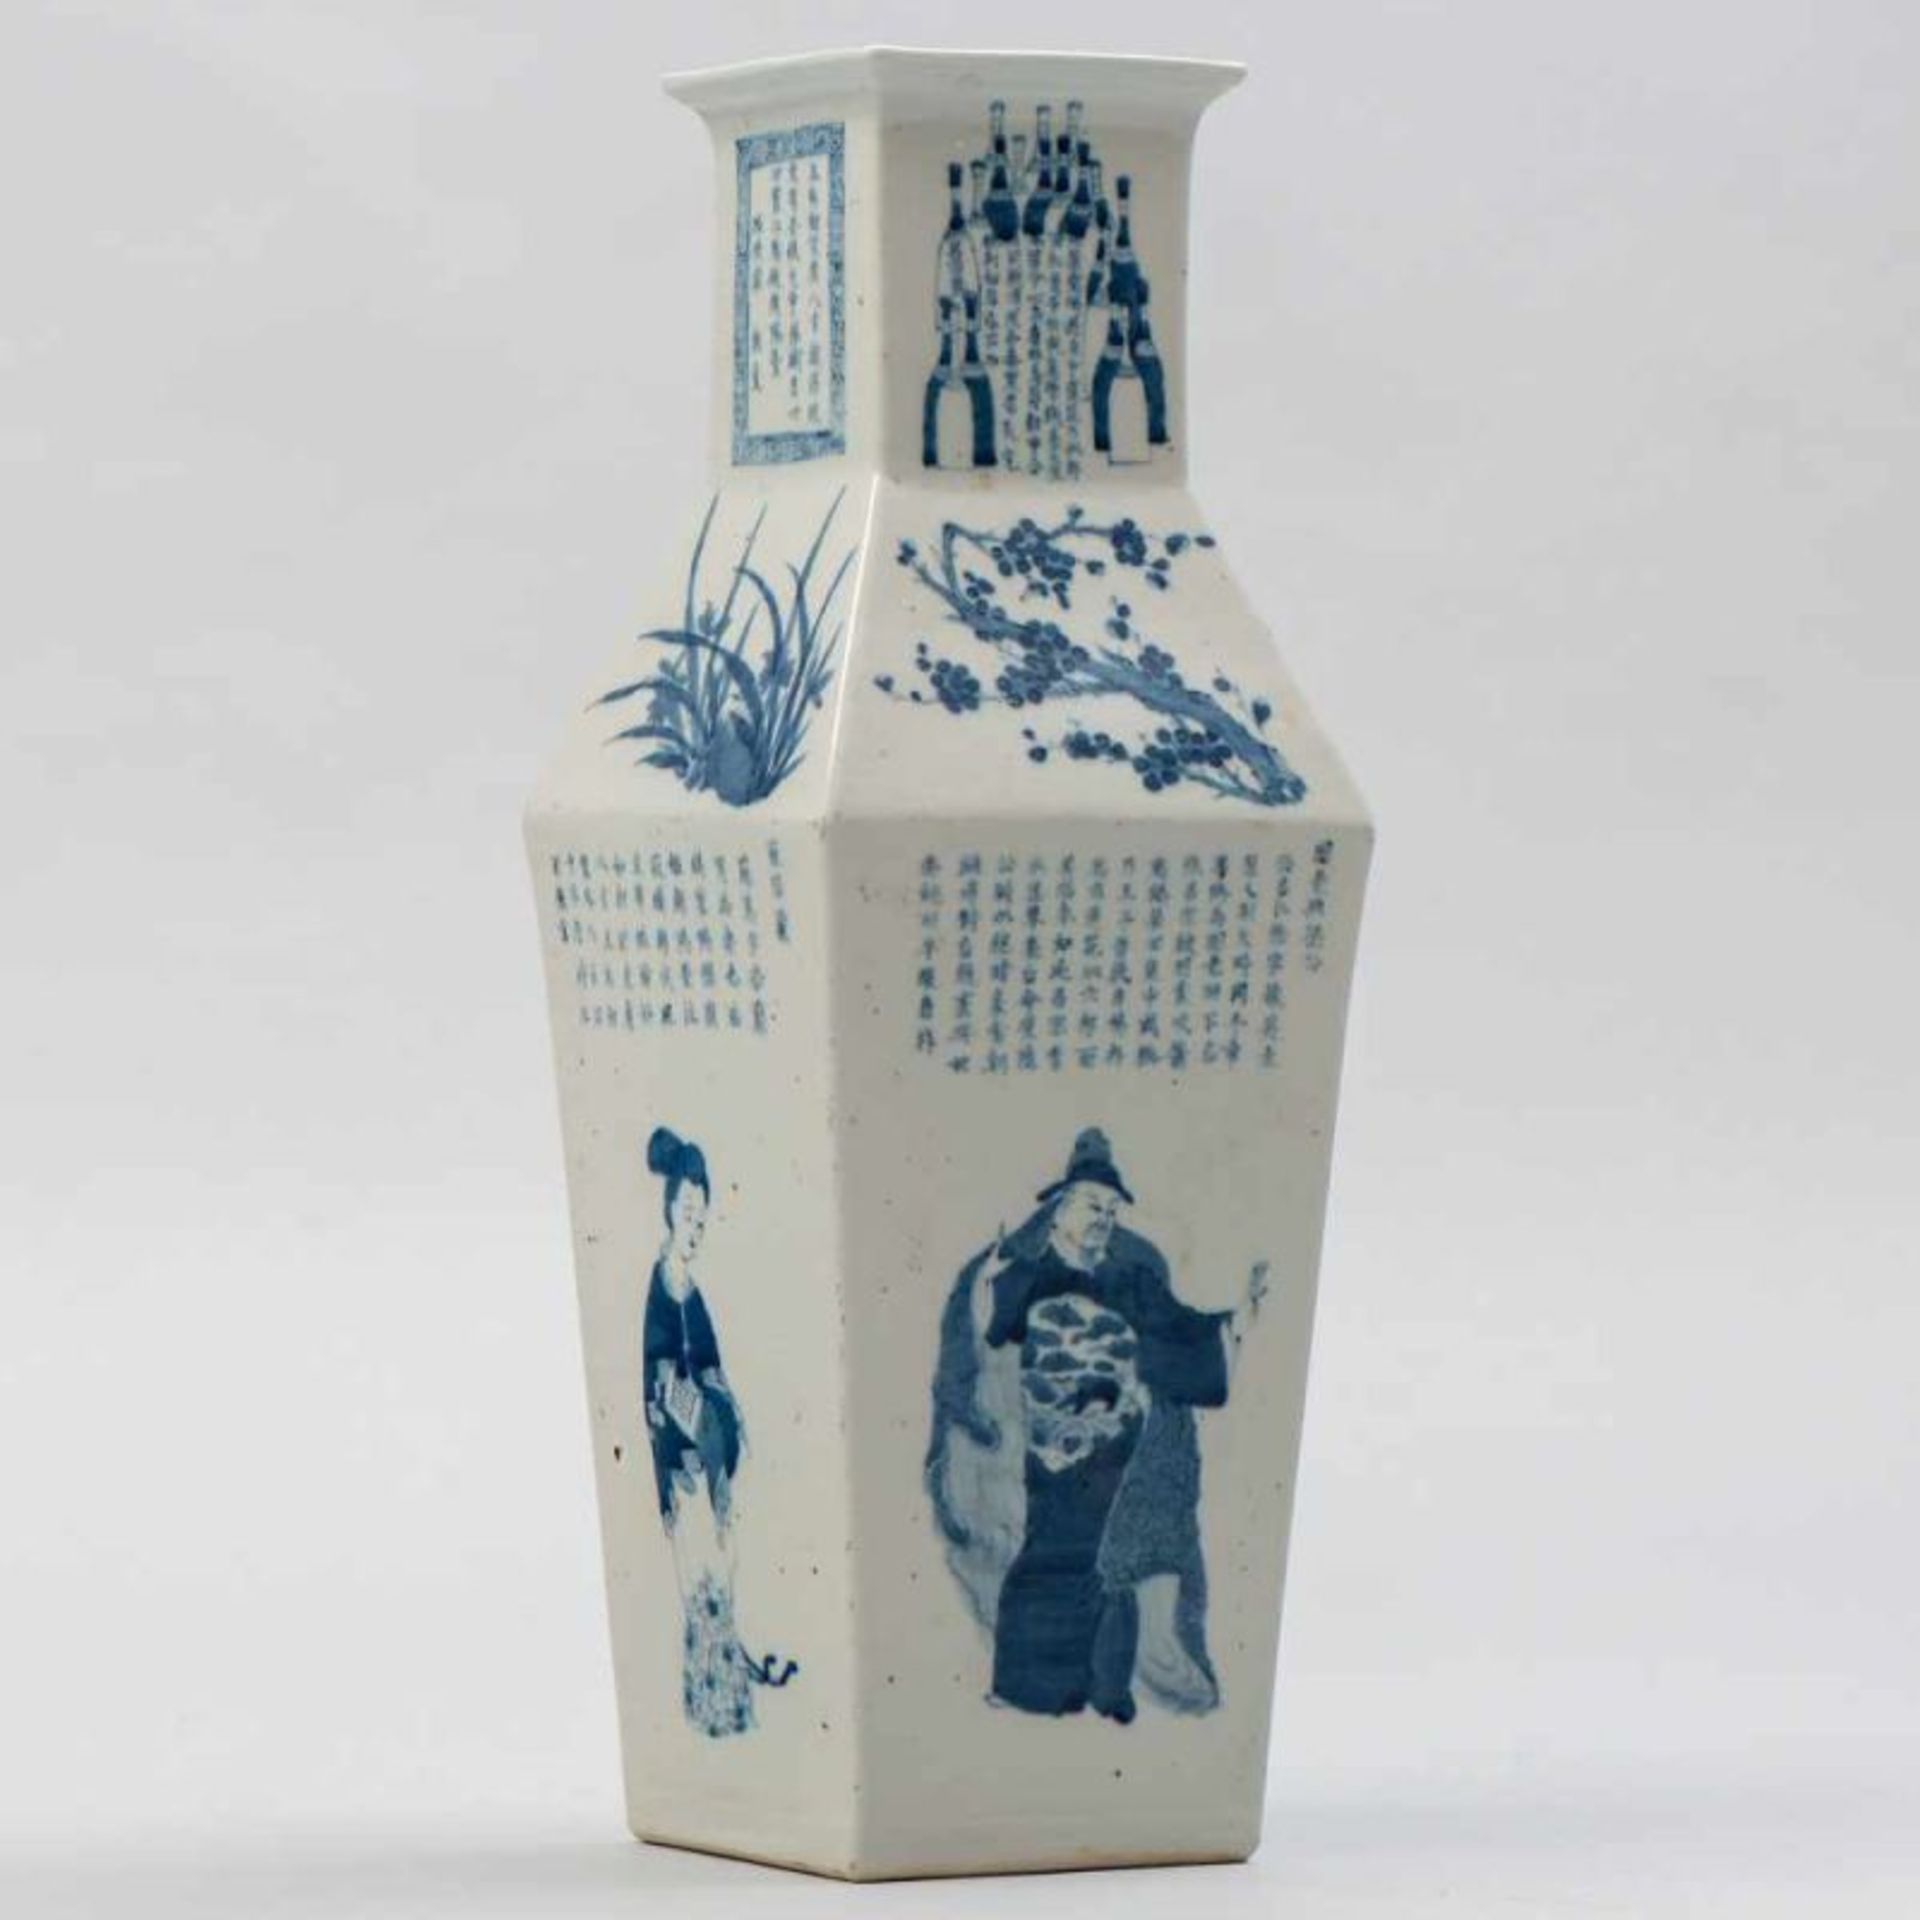 Jarrón chino de forma poligonal en porcelana china. Trabajo Chino, Siglo XIX/XX Decorado con